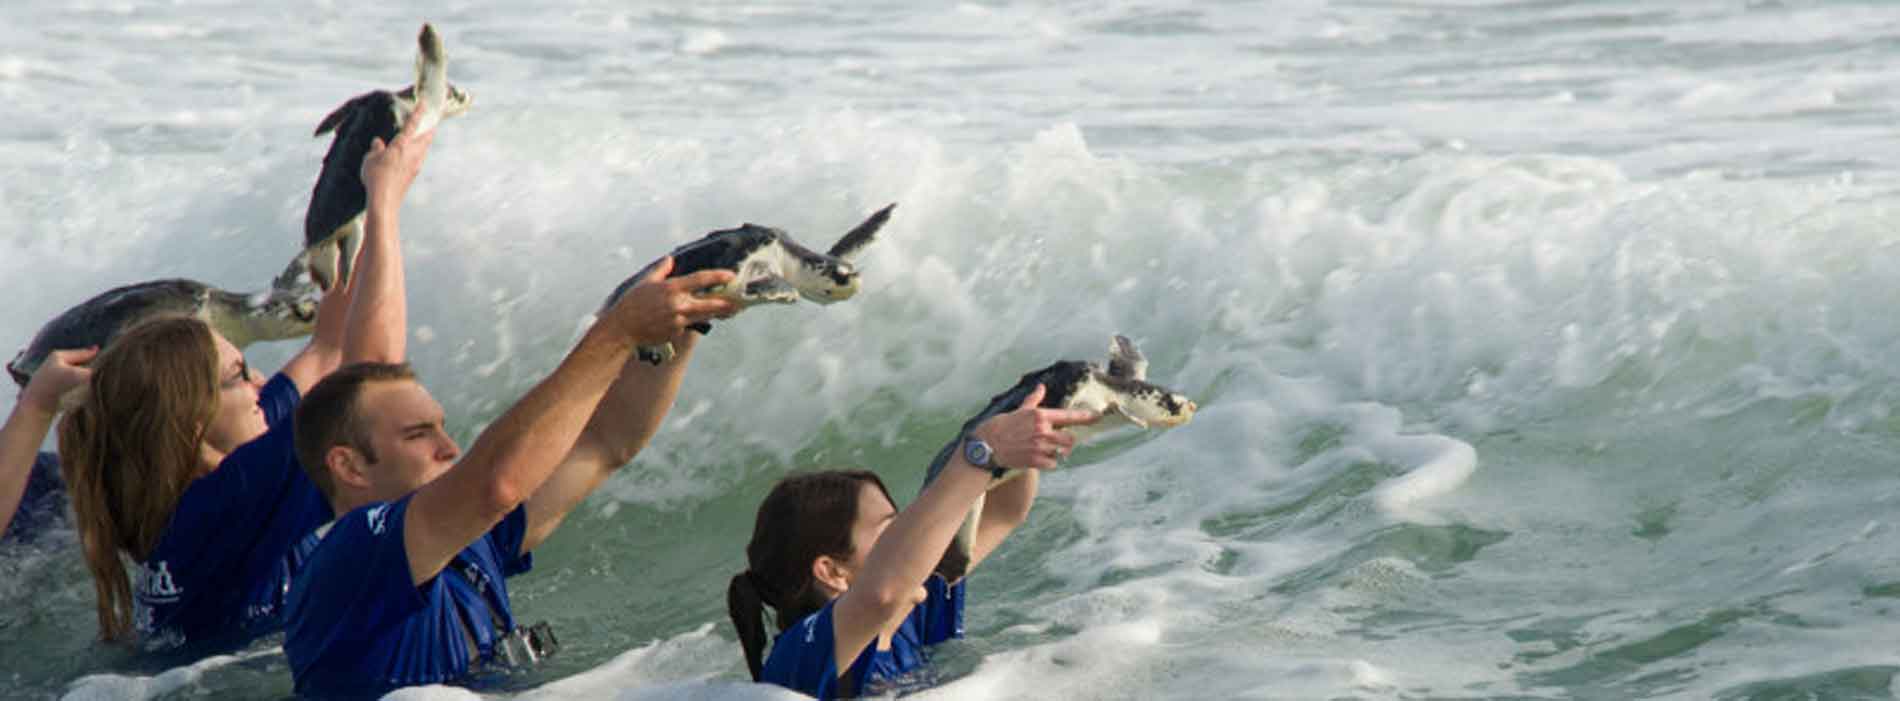 Releasing three sea turtles in the waves